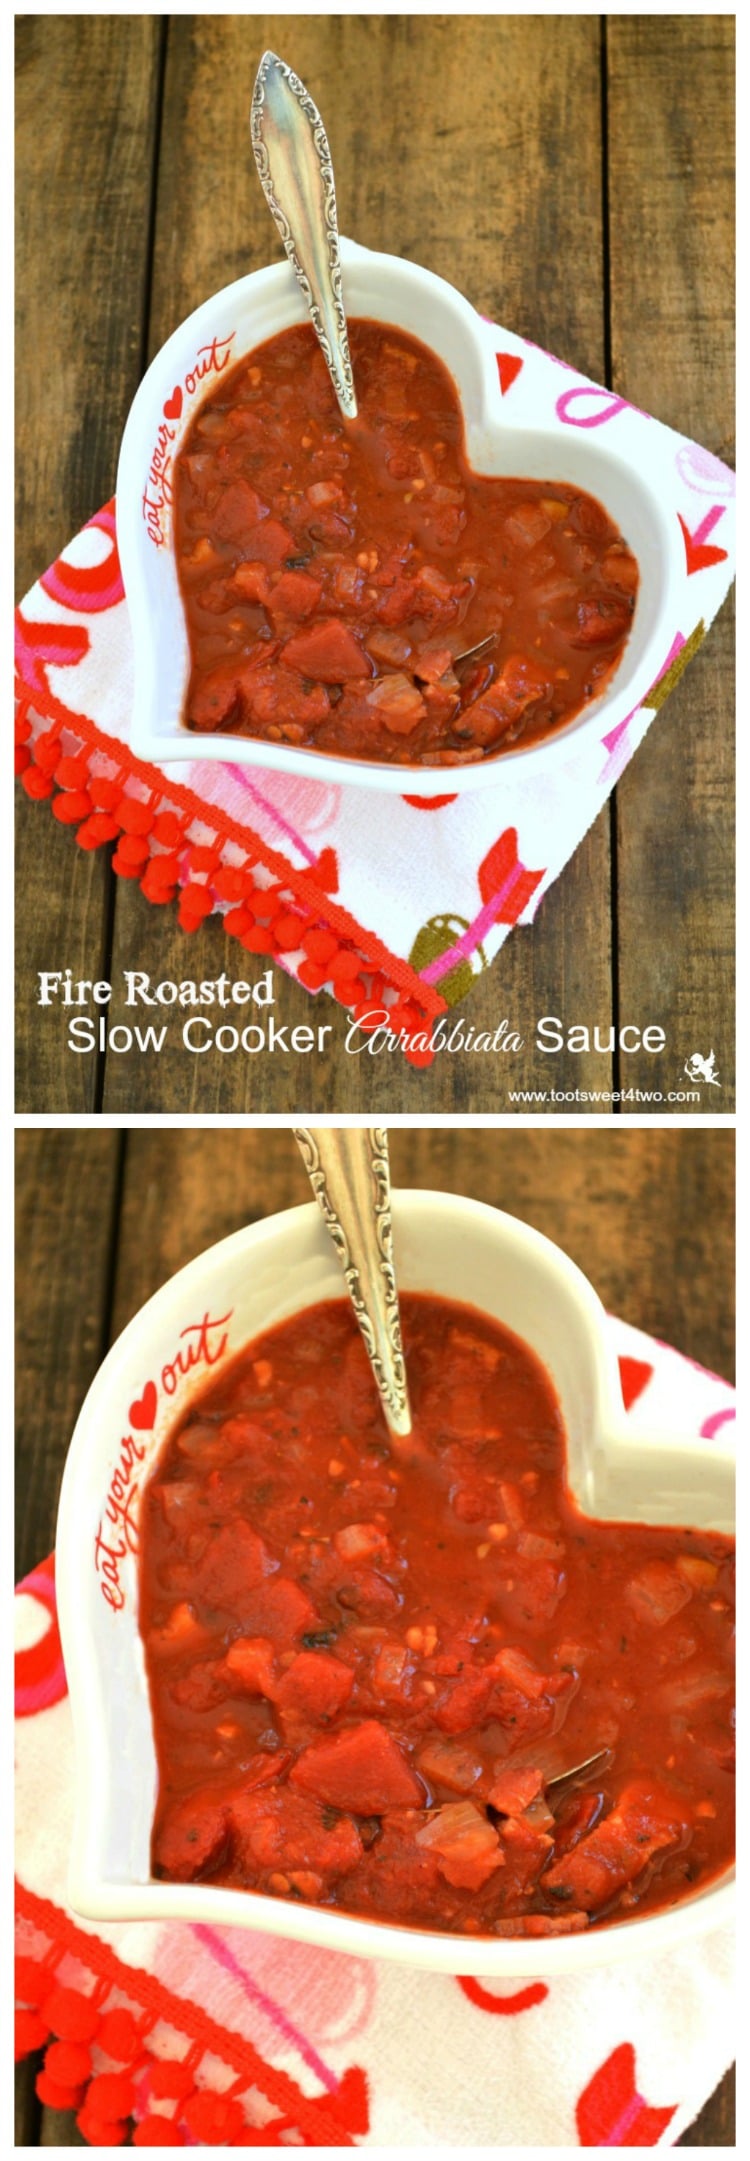 Fire Roasted Slow Cooker Arrabbiata Sauce collage